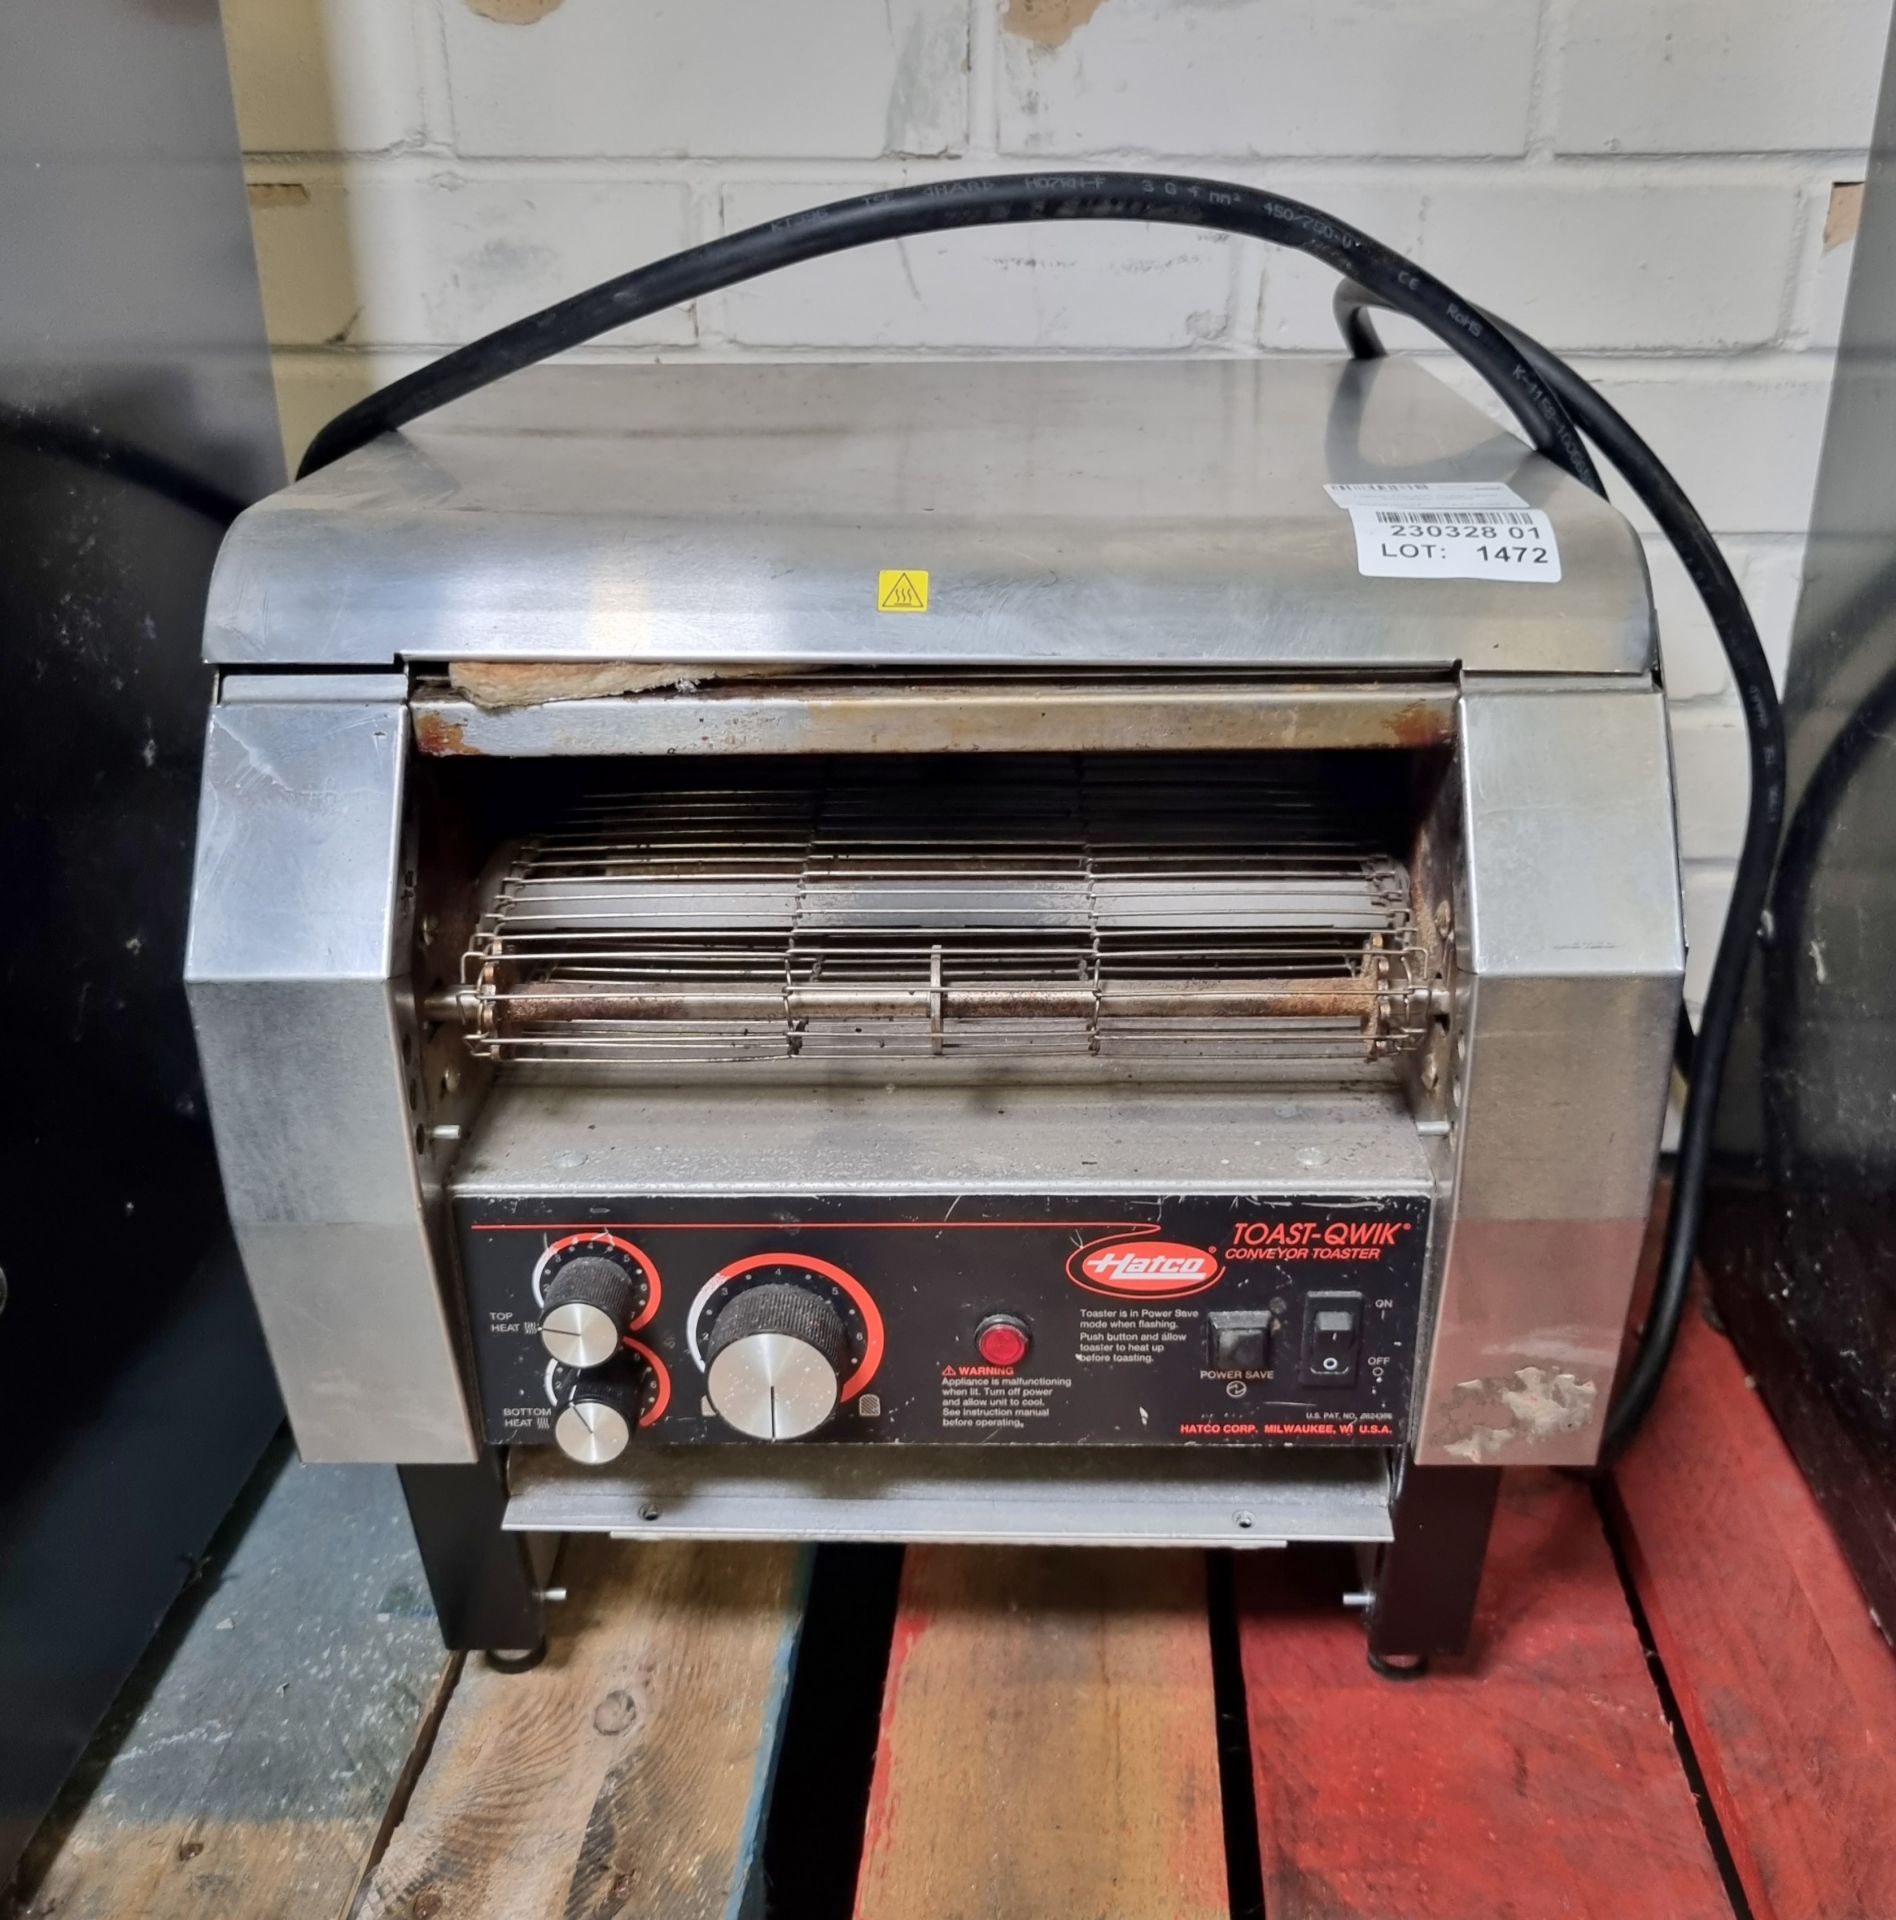 Hatco TQ-405 Toast-Qwik conveyor toaster - 370mm W